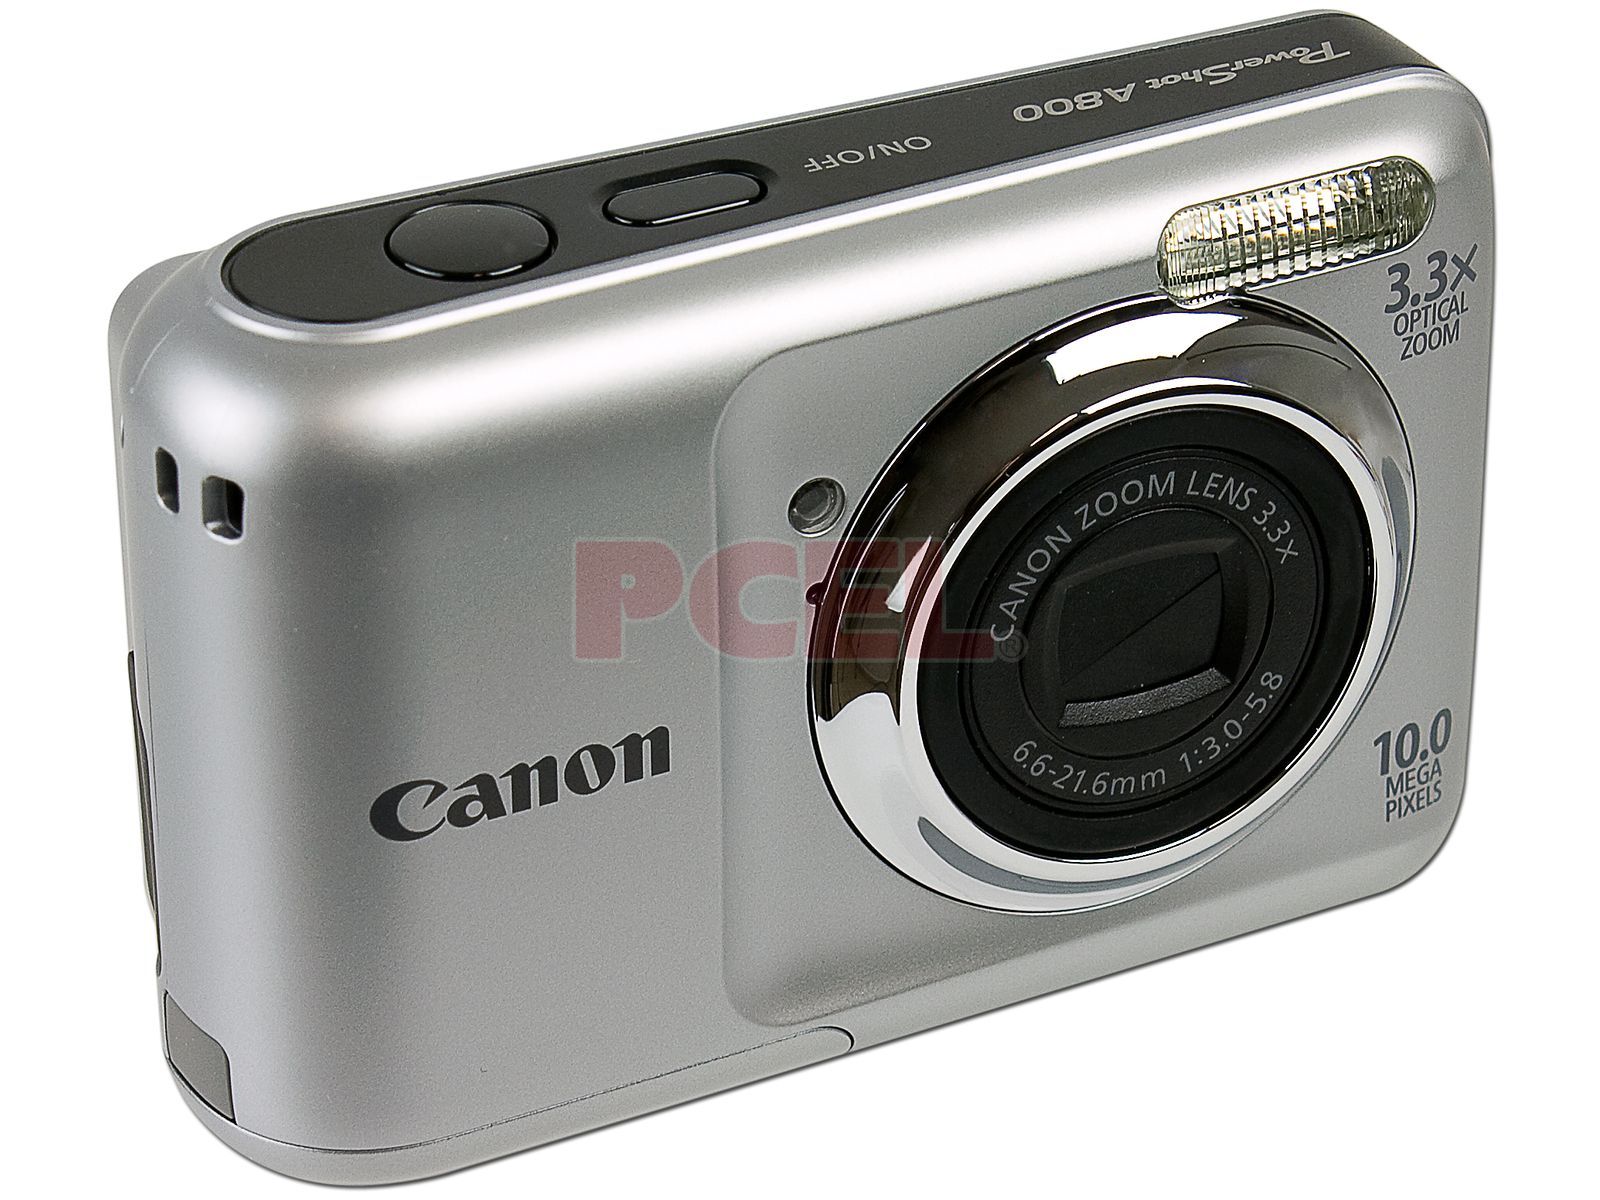 Canon PowerShot A800 10.0MP Digital Camera - Black for sale online